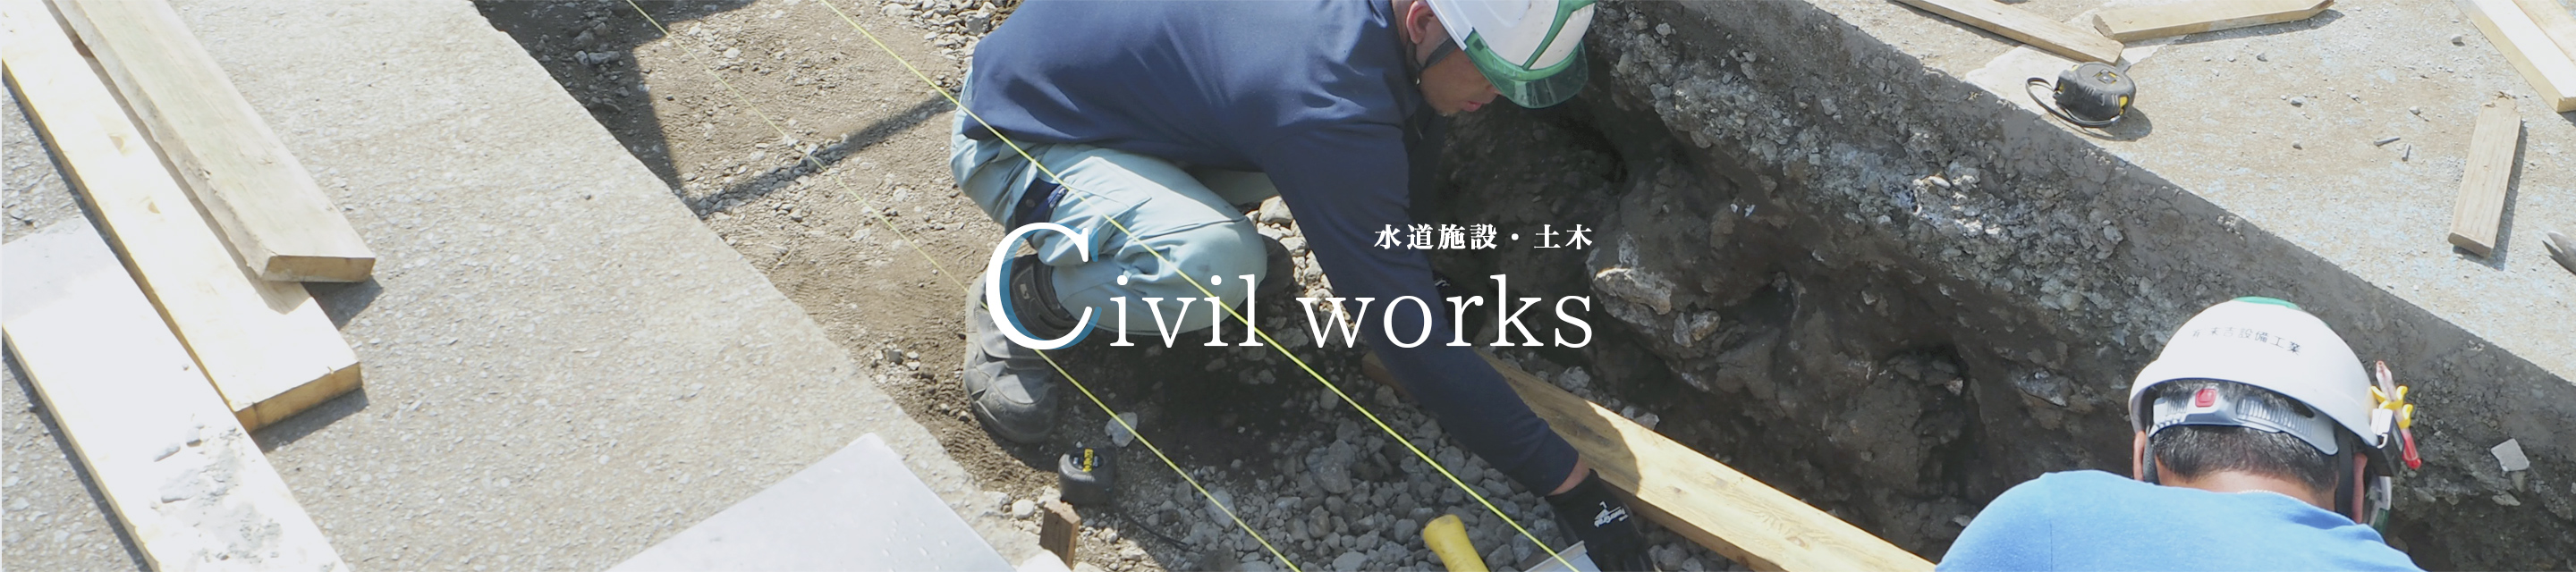 Civil works 水道施設・土木